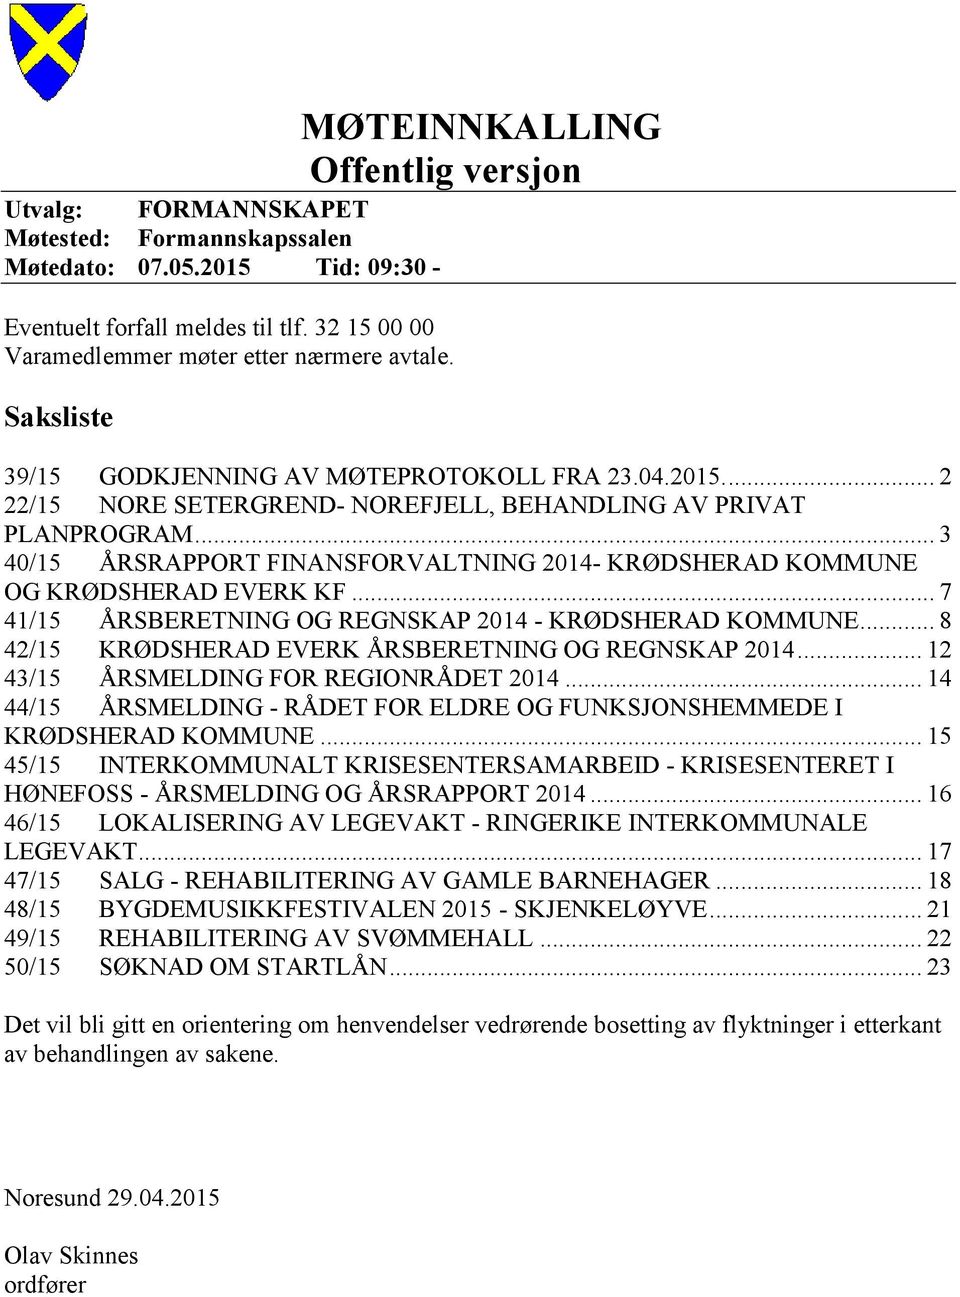 .. 3 40/15 ÅRSRAPPORT FINANSFORVALTNING 2014- KRØDSHERAD KOMMUNE OG KRØDSHERAD EVERK KF... 7 41/15 ÅRSBERETNING OG REGNSKAP 2014 - KRØDSHERAD KOMMUNE.